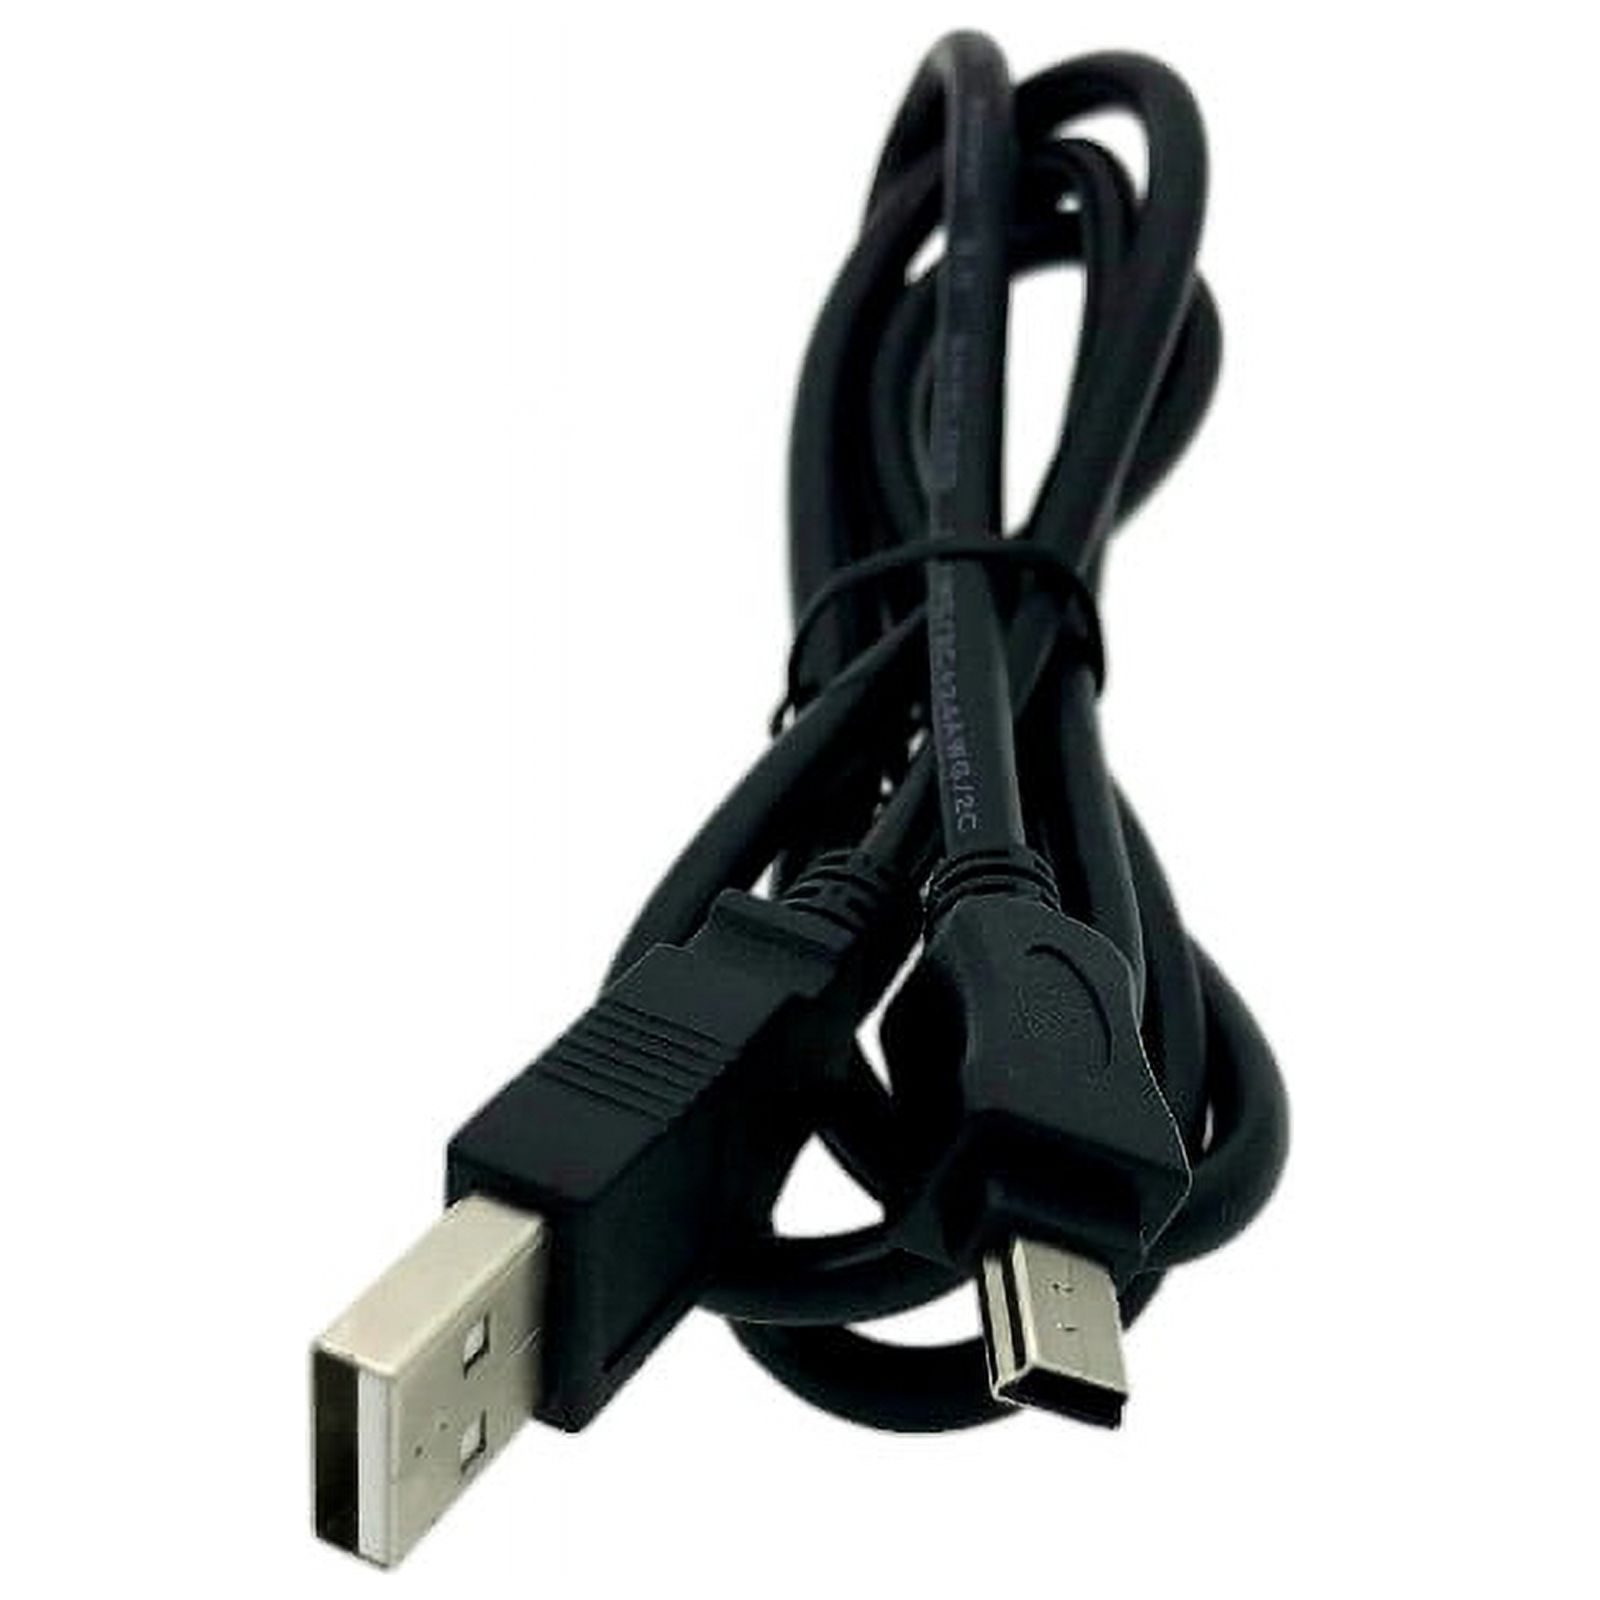 Kentek 3 Feet FT USB Cable Cord For CANON PowerSHOT A460, A490, EOS DIGITAL REBEL T4, T6 Camera - image 1 of 1